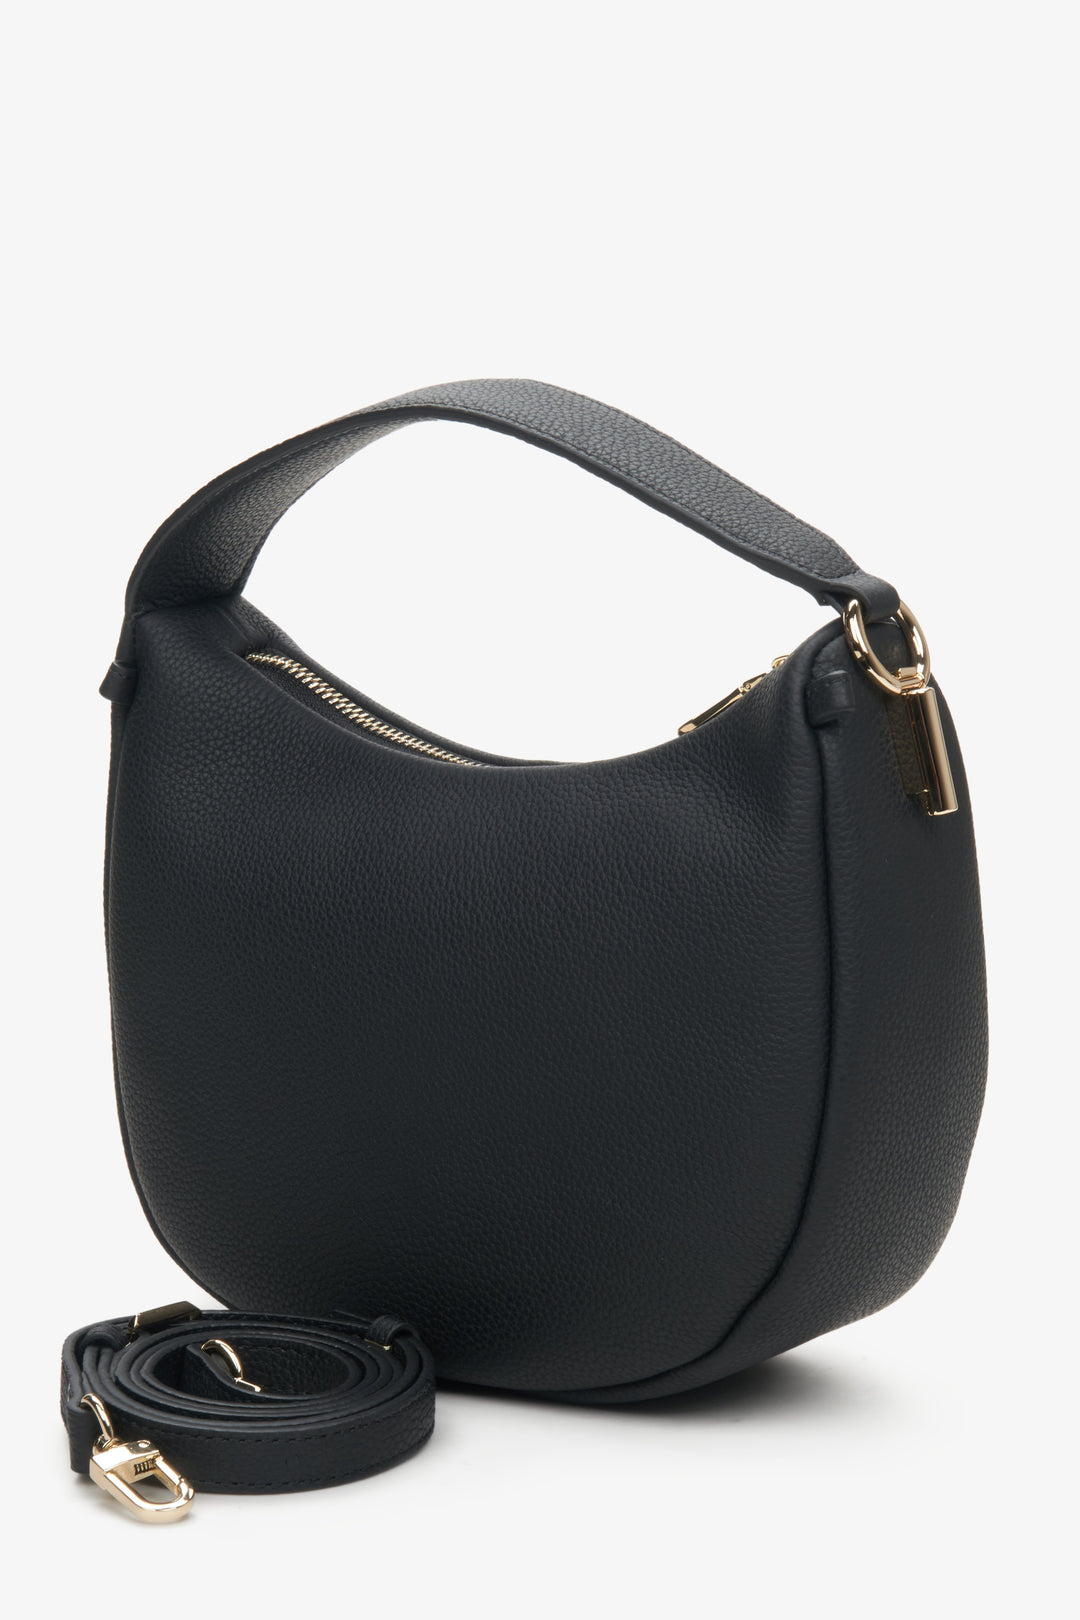 Leather women's crescent-shaped handbag by Estro in black color.